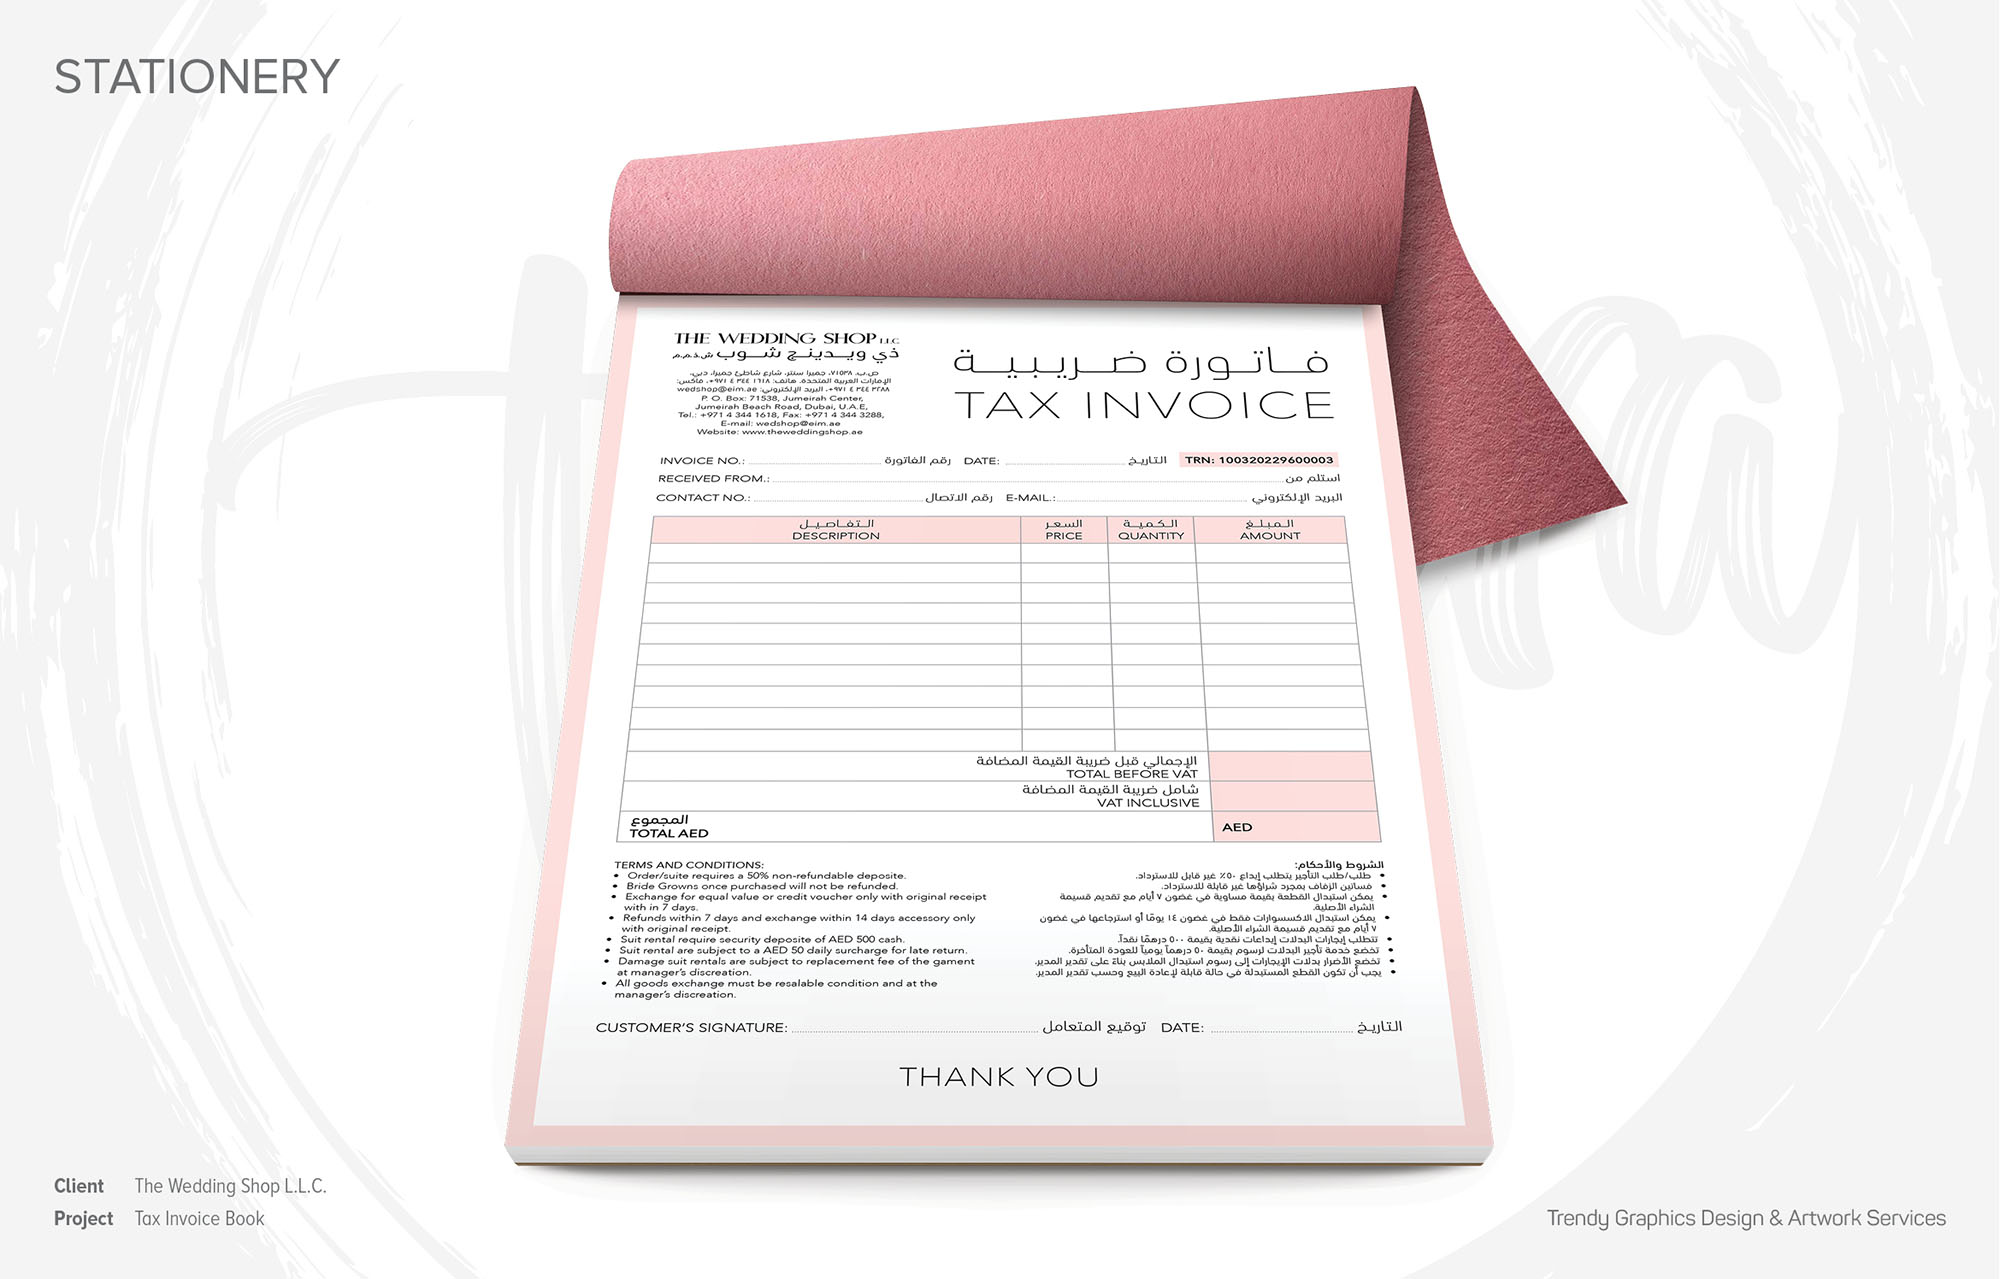 The Wedding Shop – Tax Invoice Book